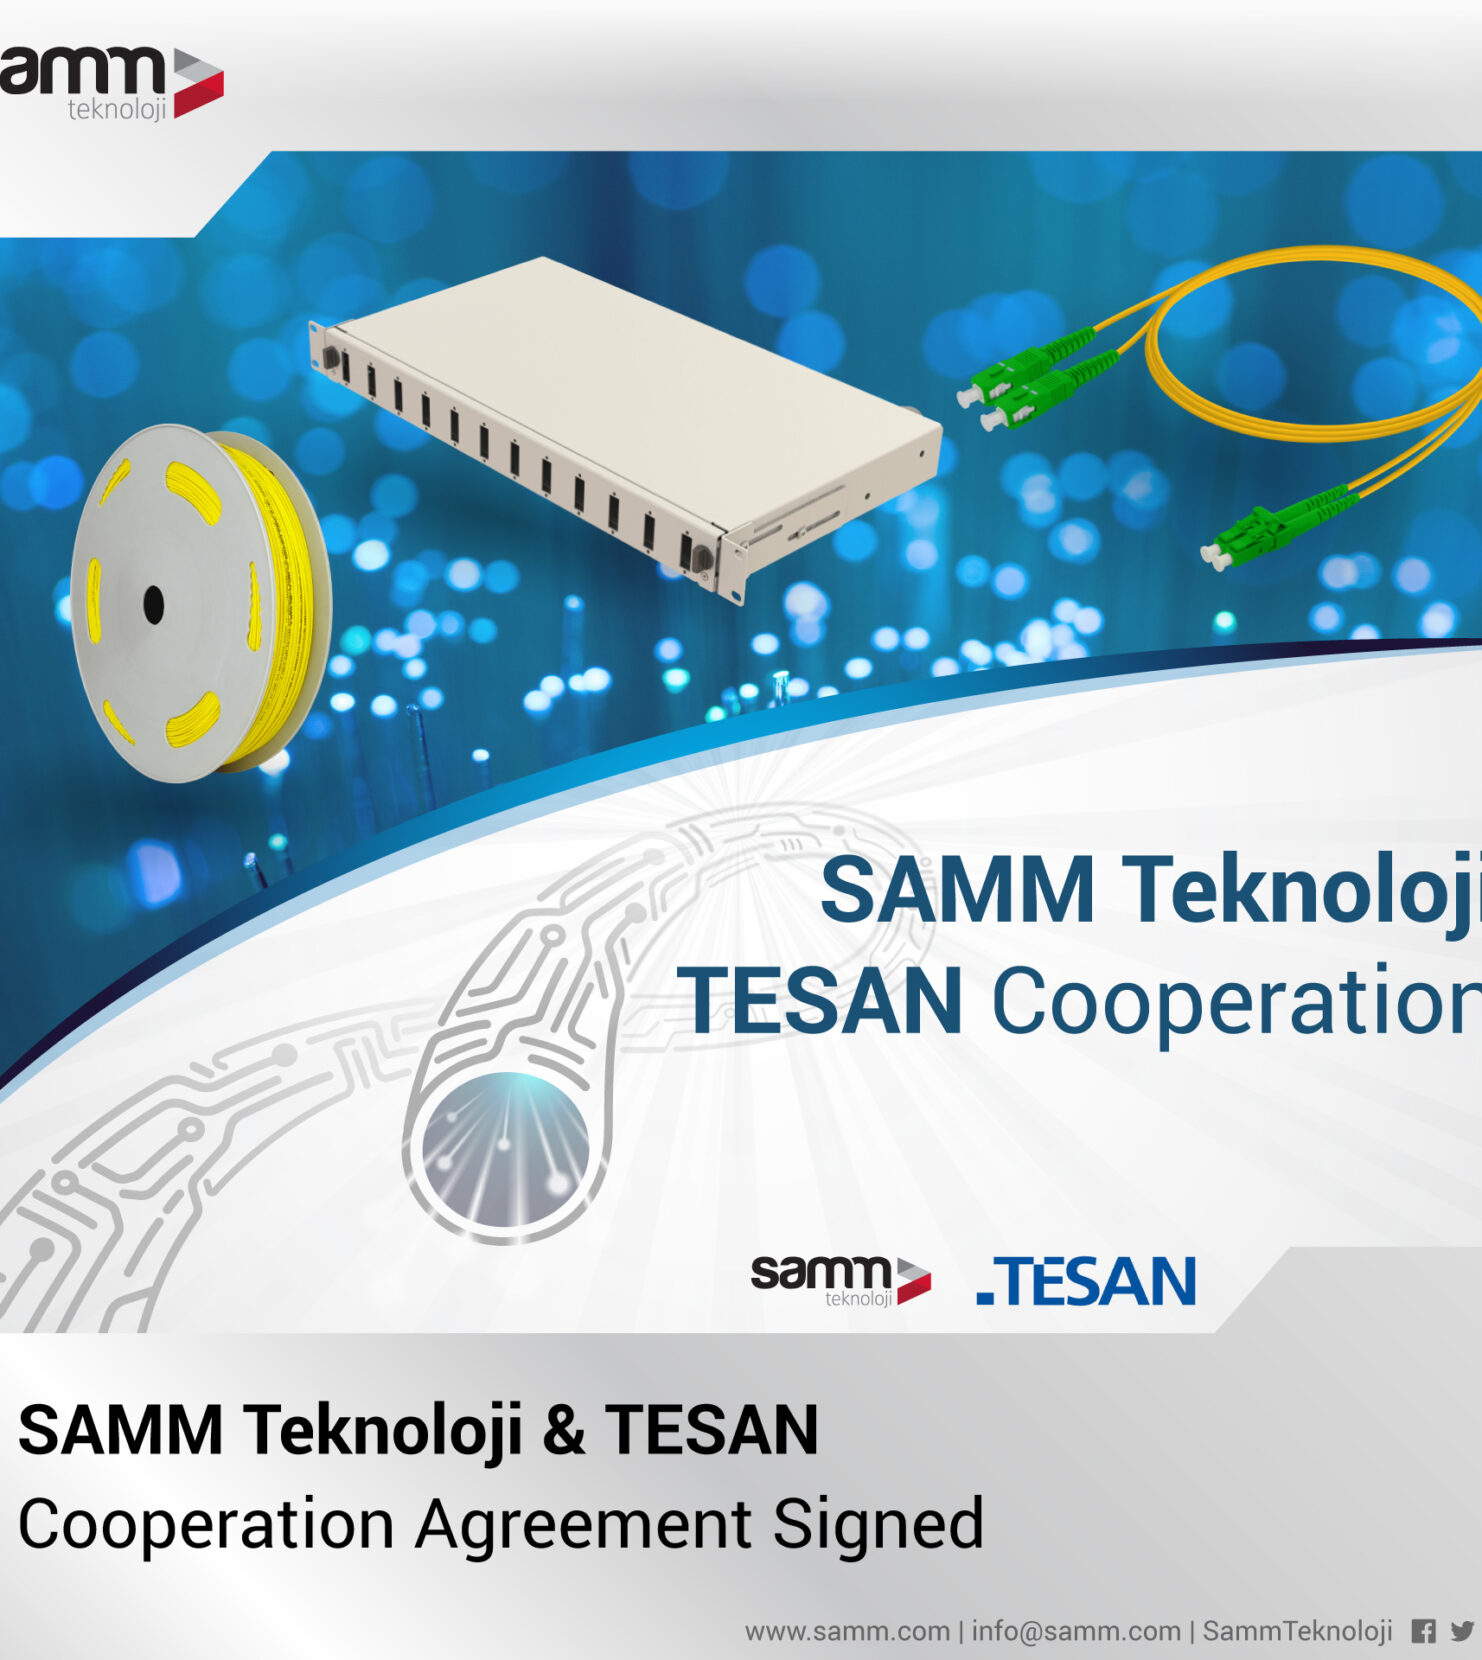 SAMM Teknoloji and TESAN Sign a Cooperation Agreement